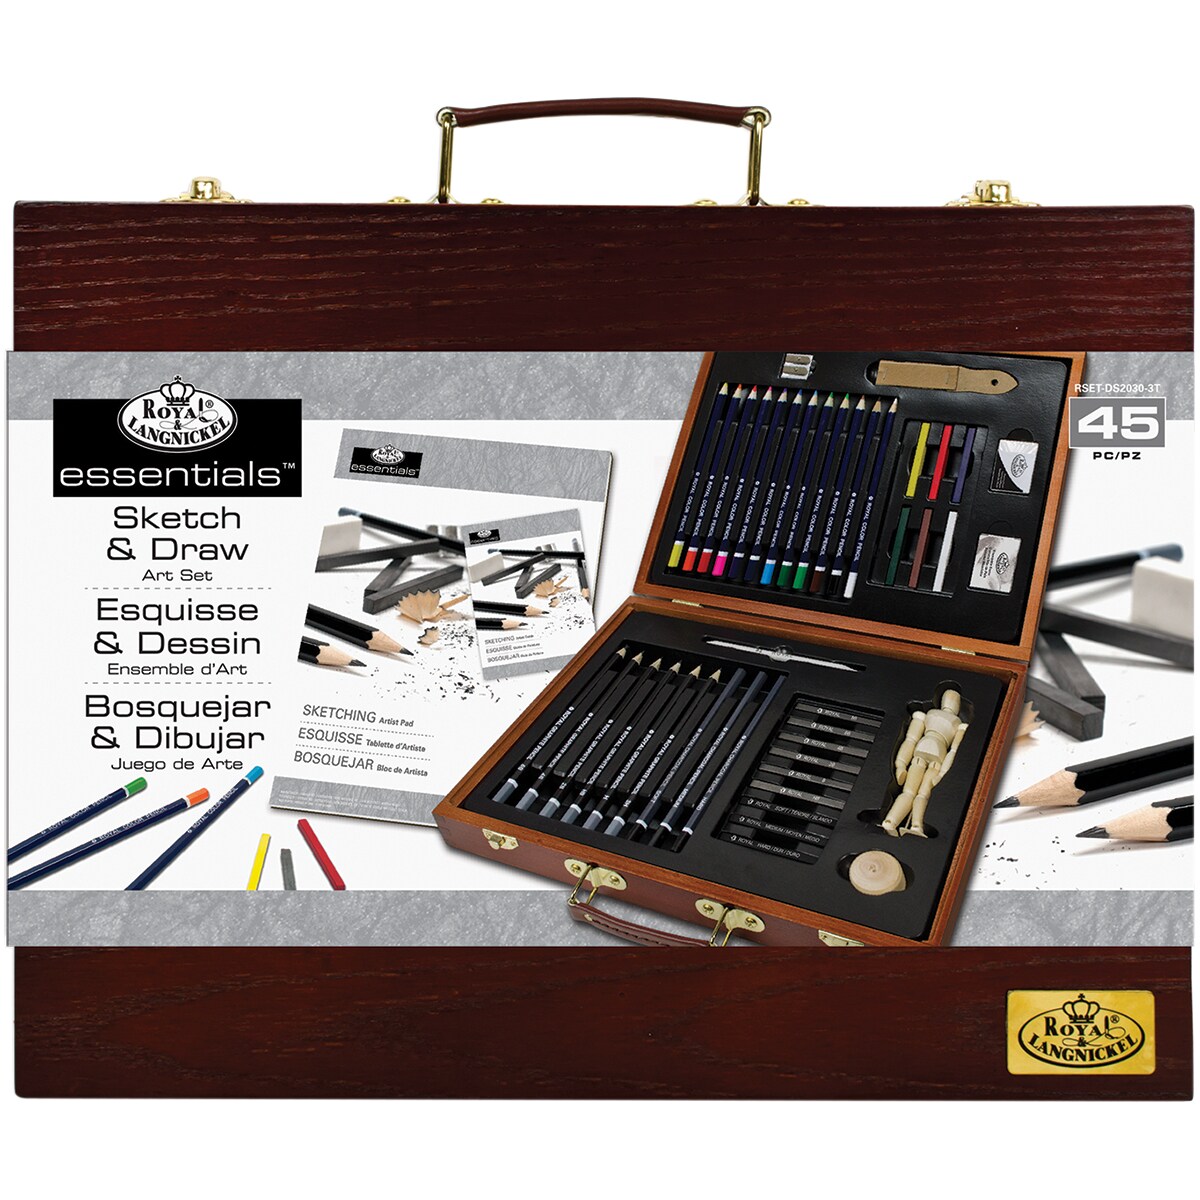 Royal &#x26; Langnickel(R) essentials(TM) Wooden Box Art Set-Sketch &#x26; Draw 45/Pkg